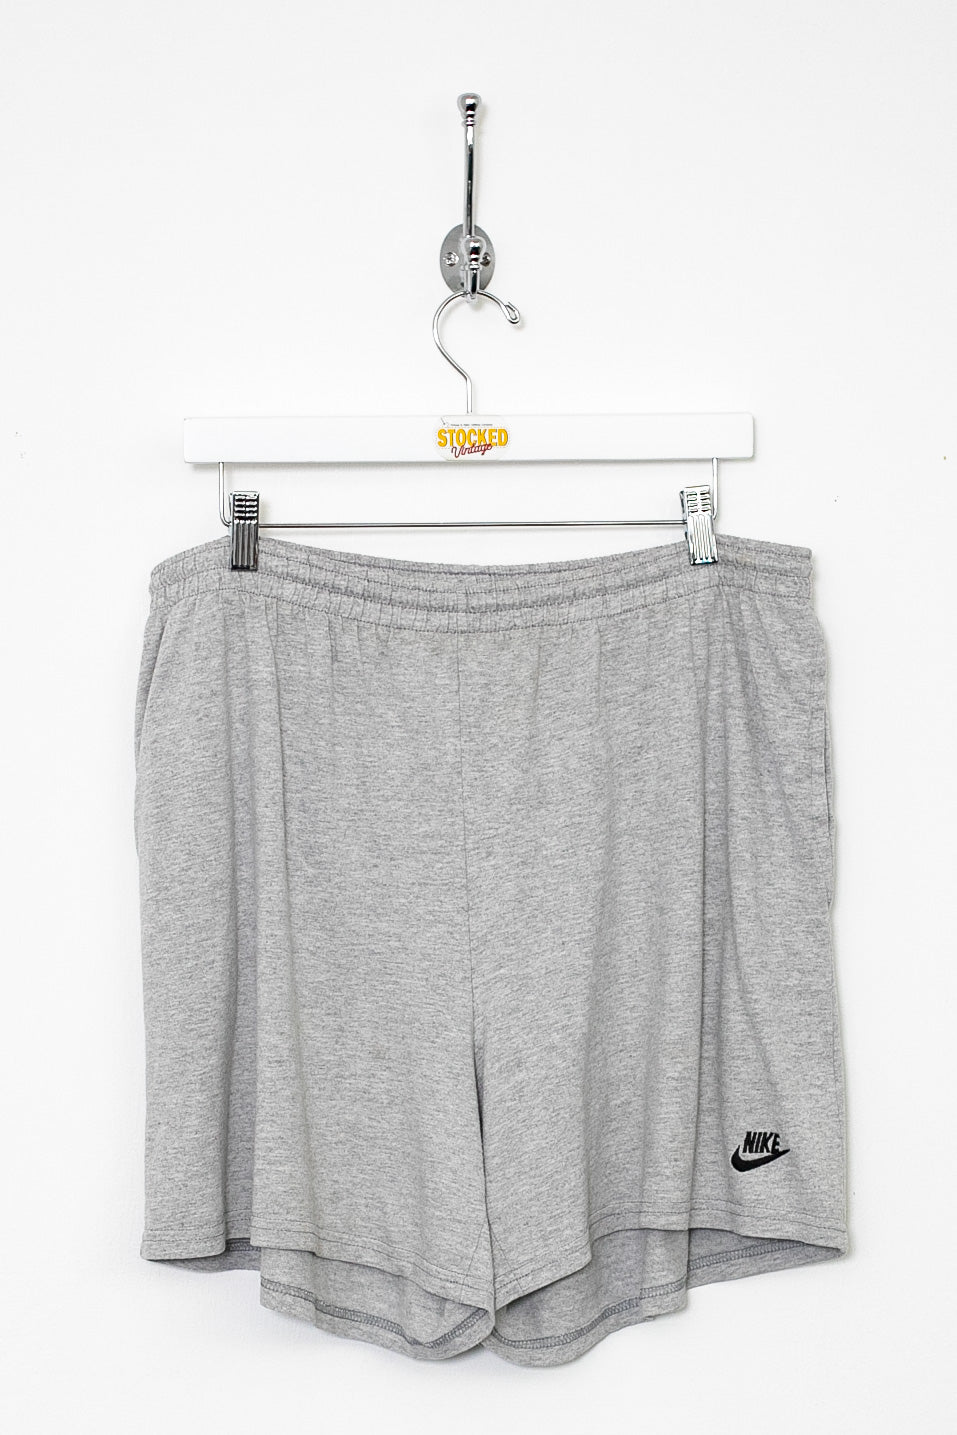 90s Nike Jogger Shorts (XL)